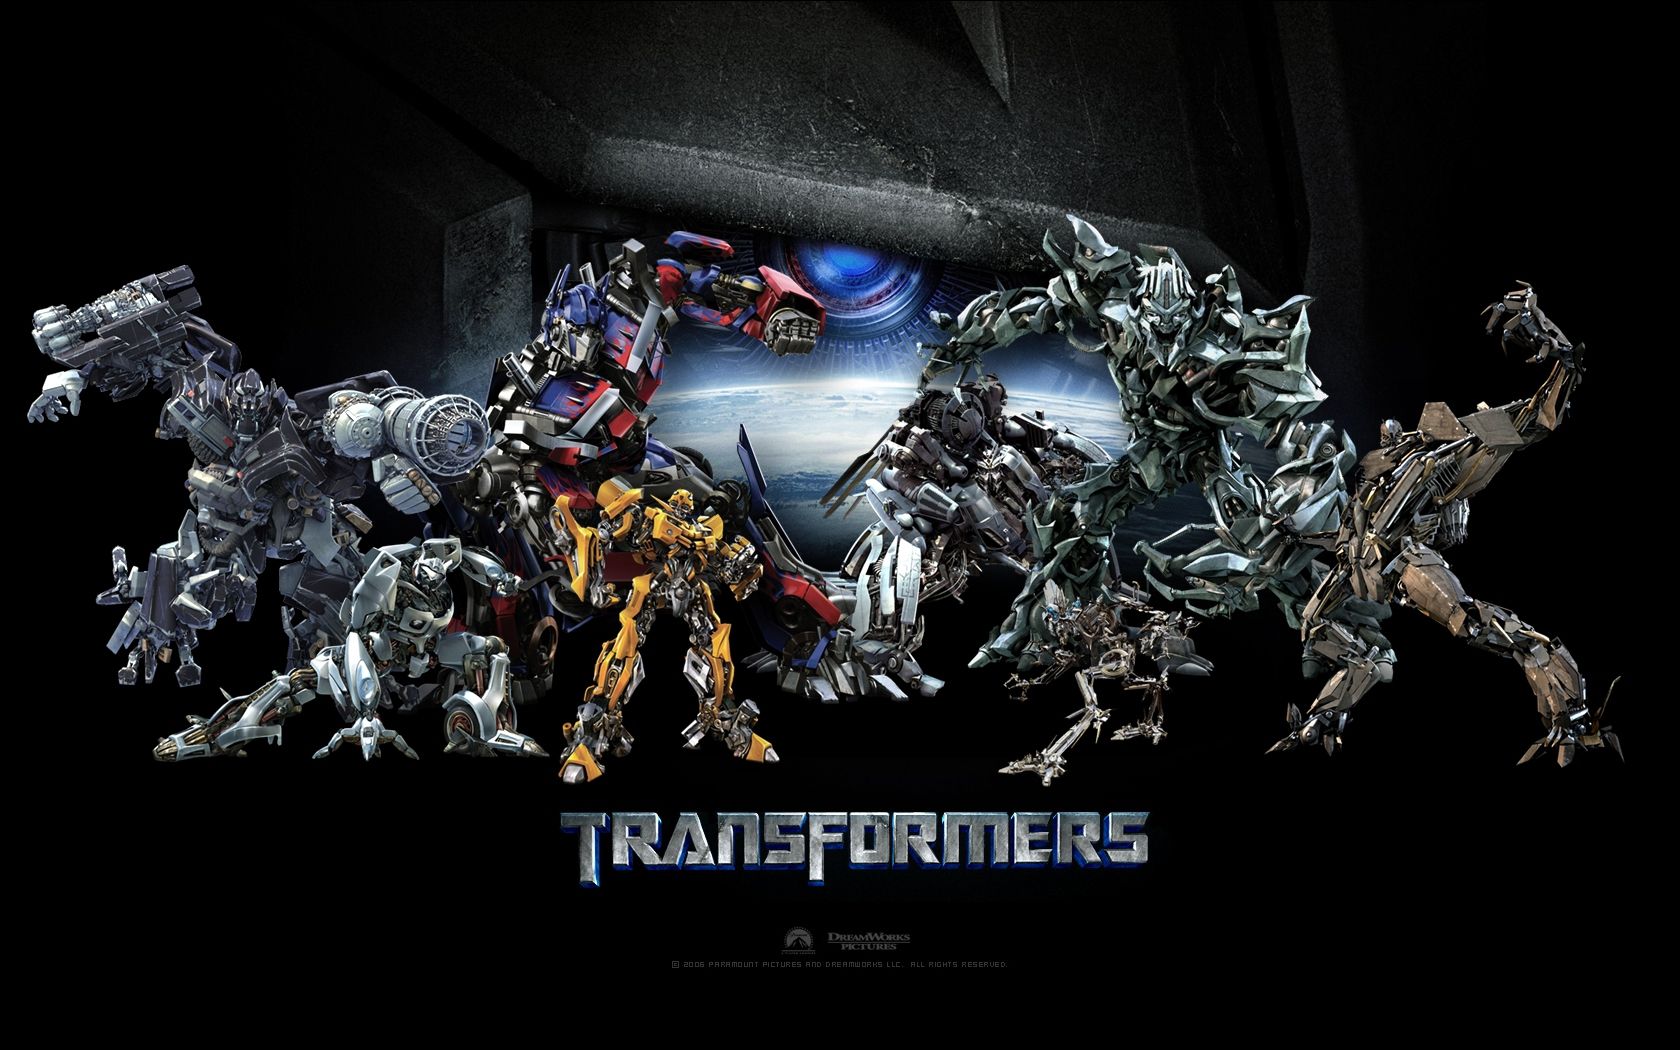 Autobots Decepticons Transformers Movie